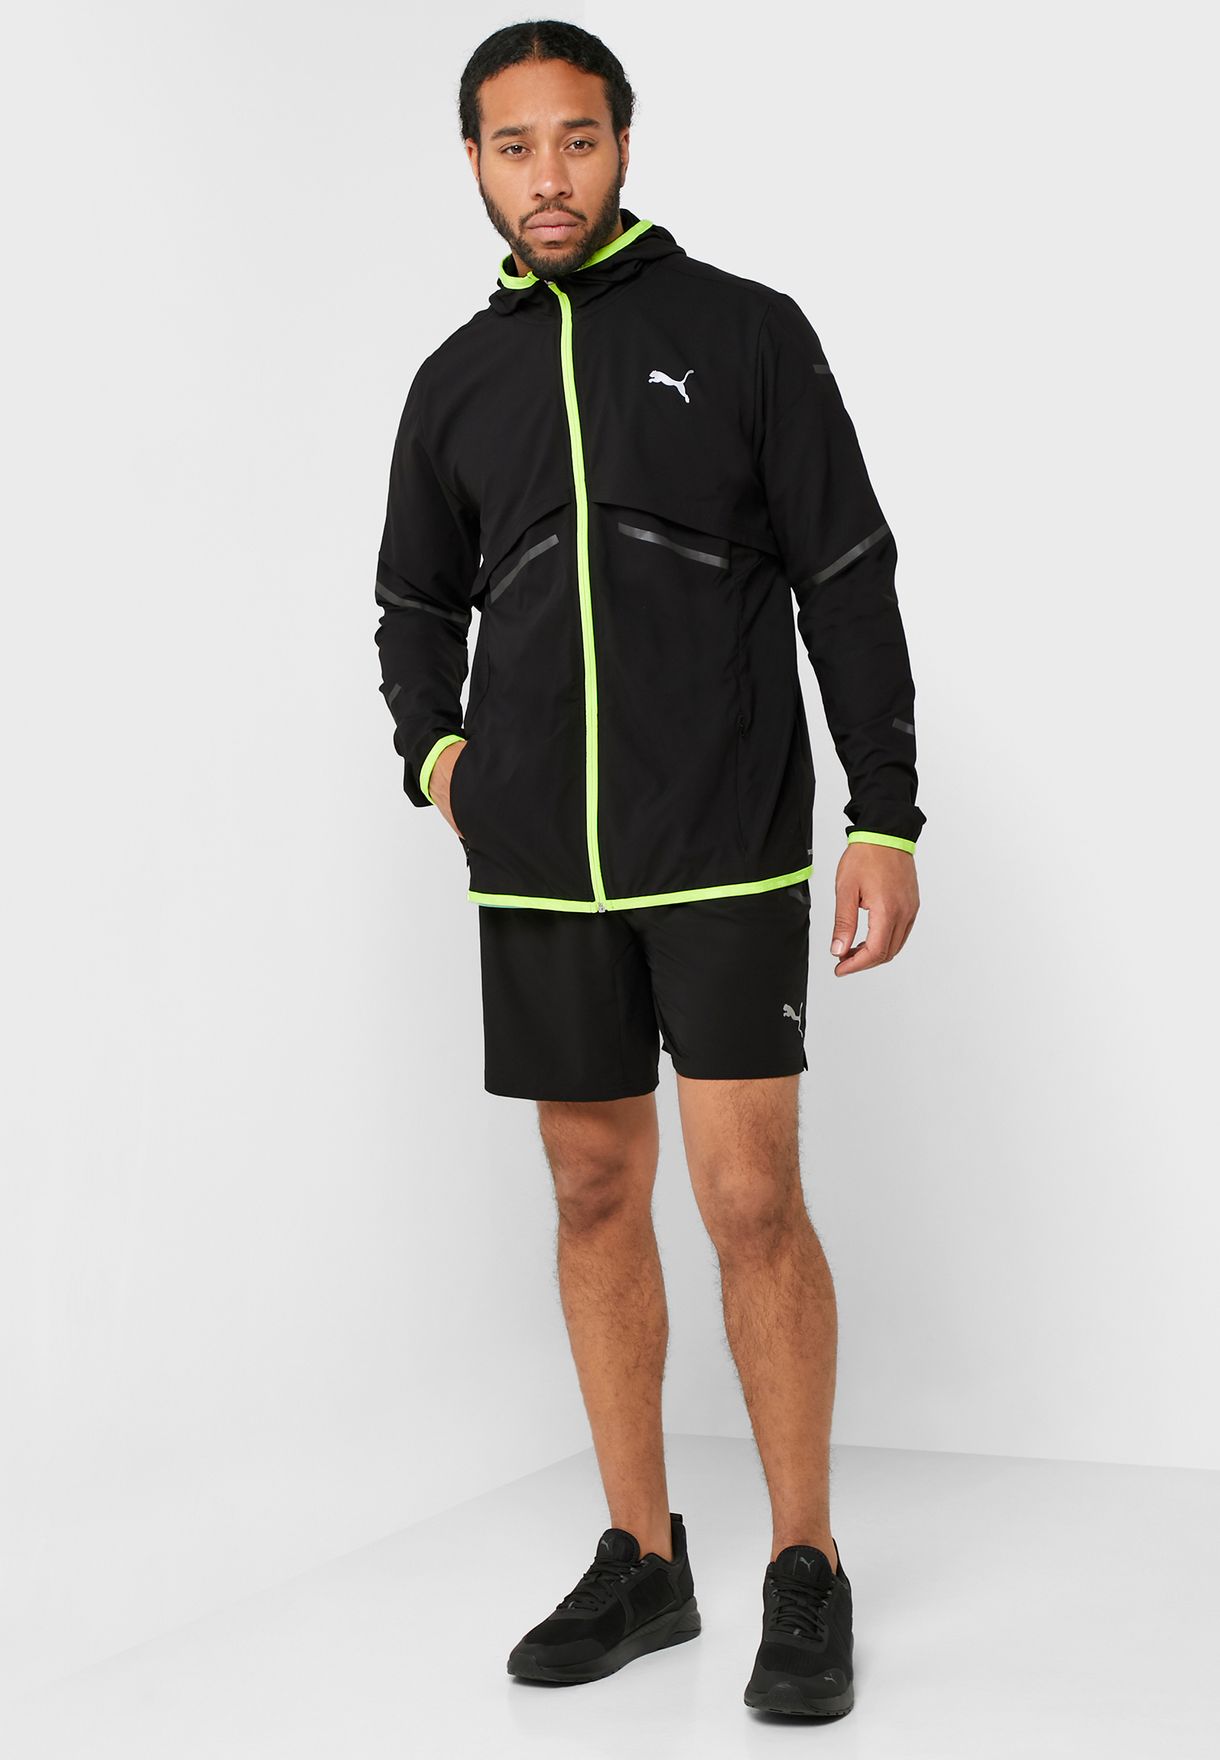 puma jogging outfit